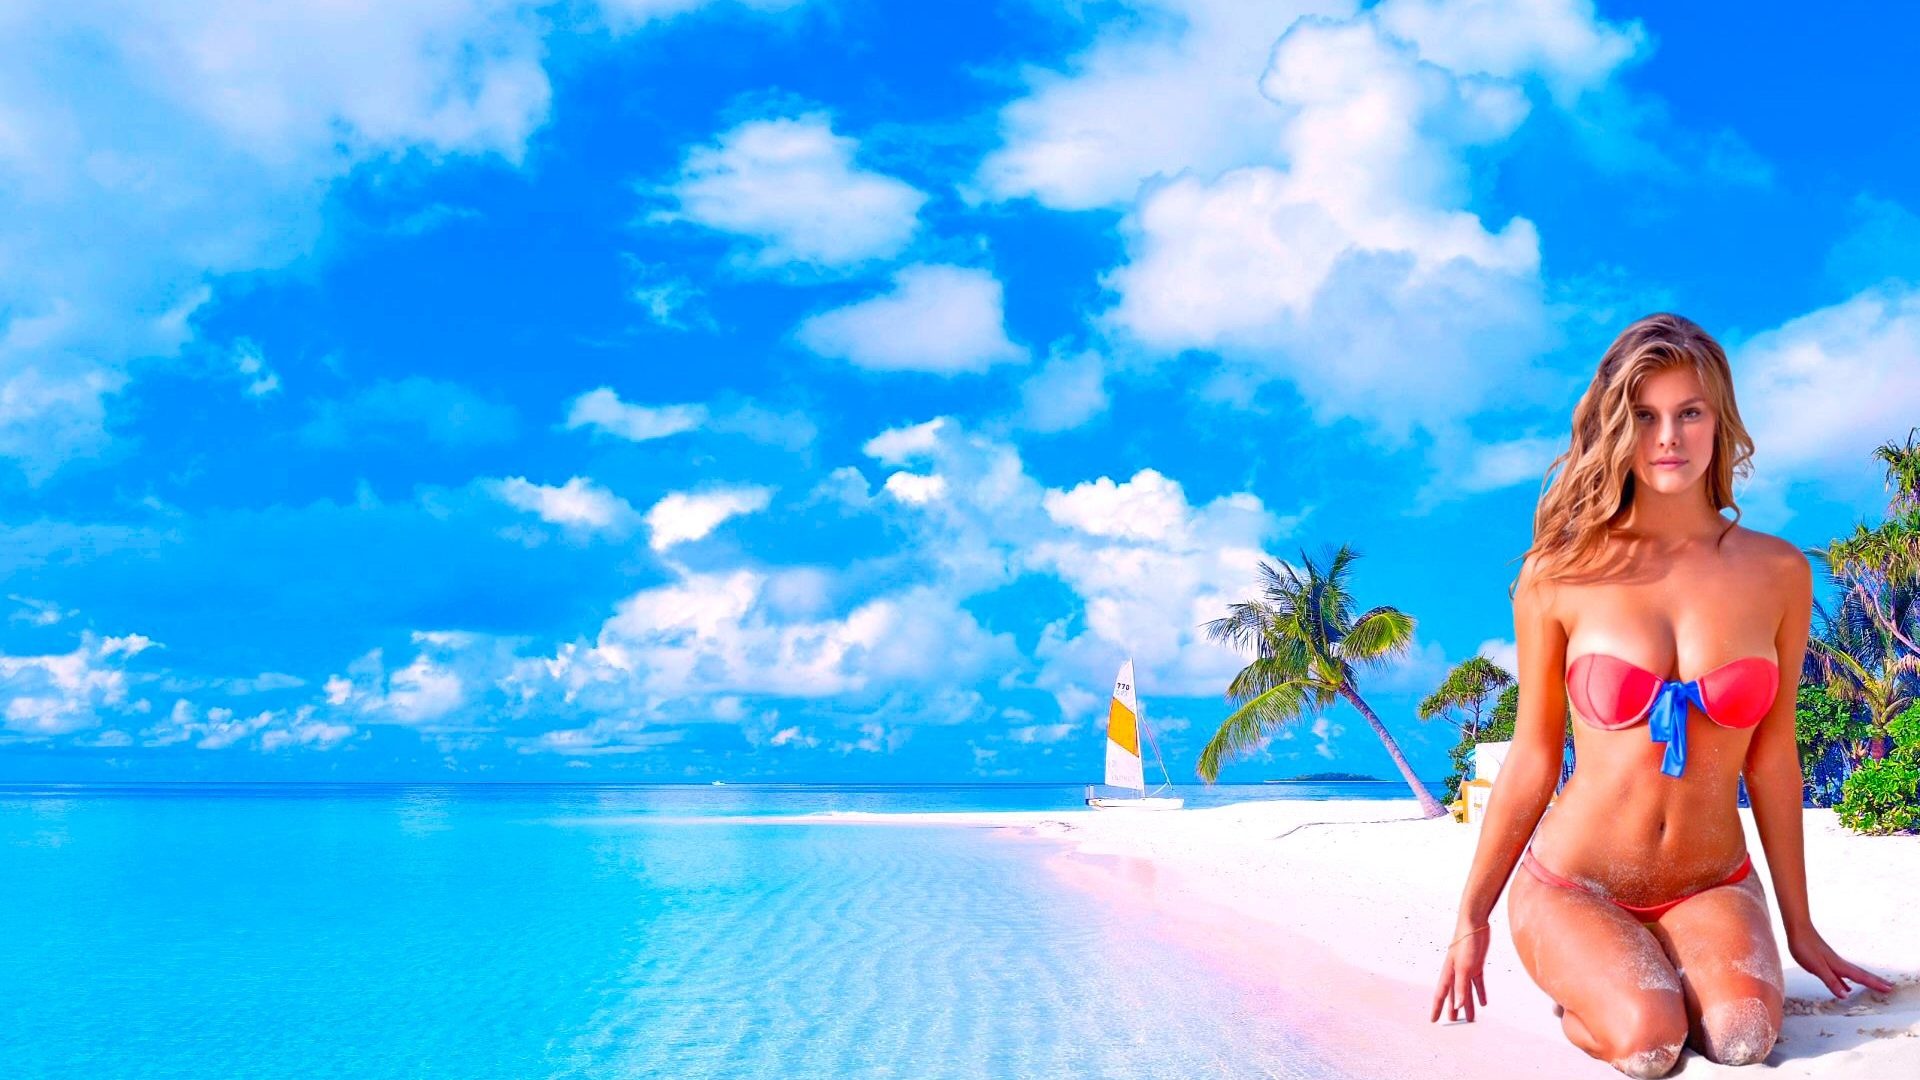 Nina Agdal Model On Beach In Bikini 4k UHD Hot Wallpaper